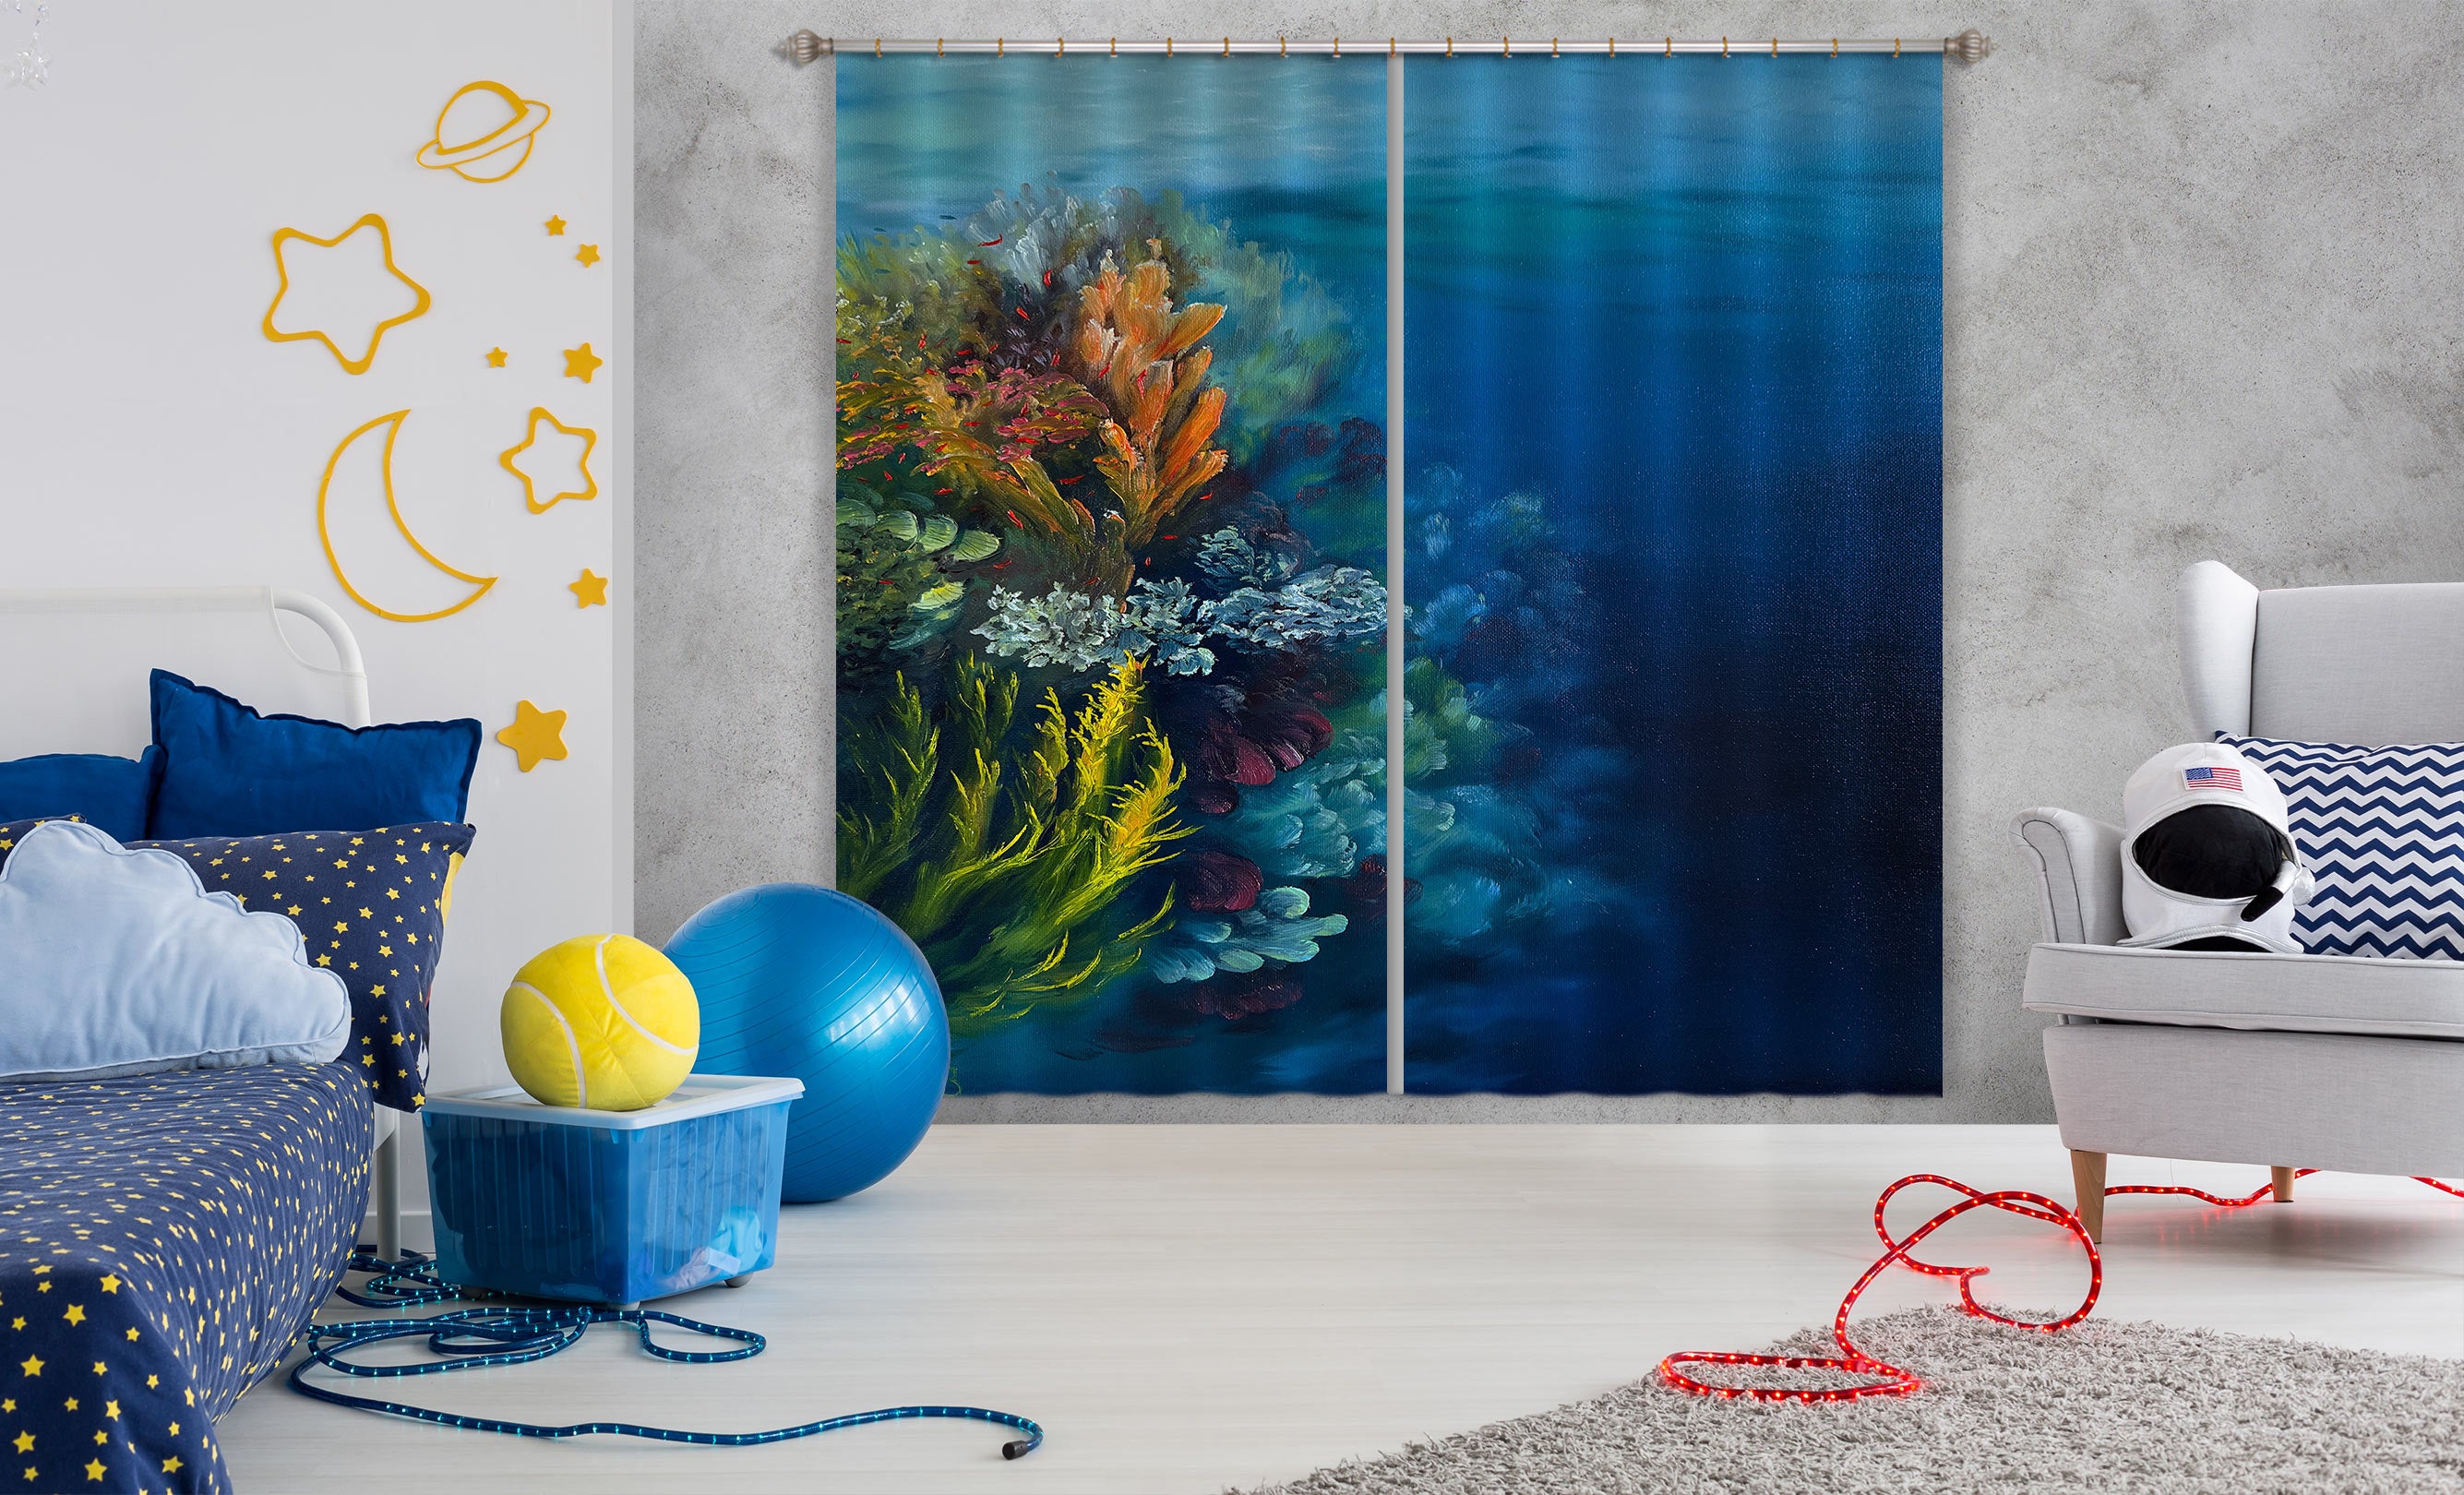 3D Ocean Coral 9757 Marina Zotova Curtain Curtains Drapes